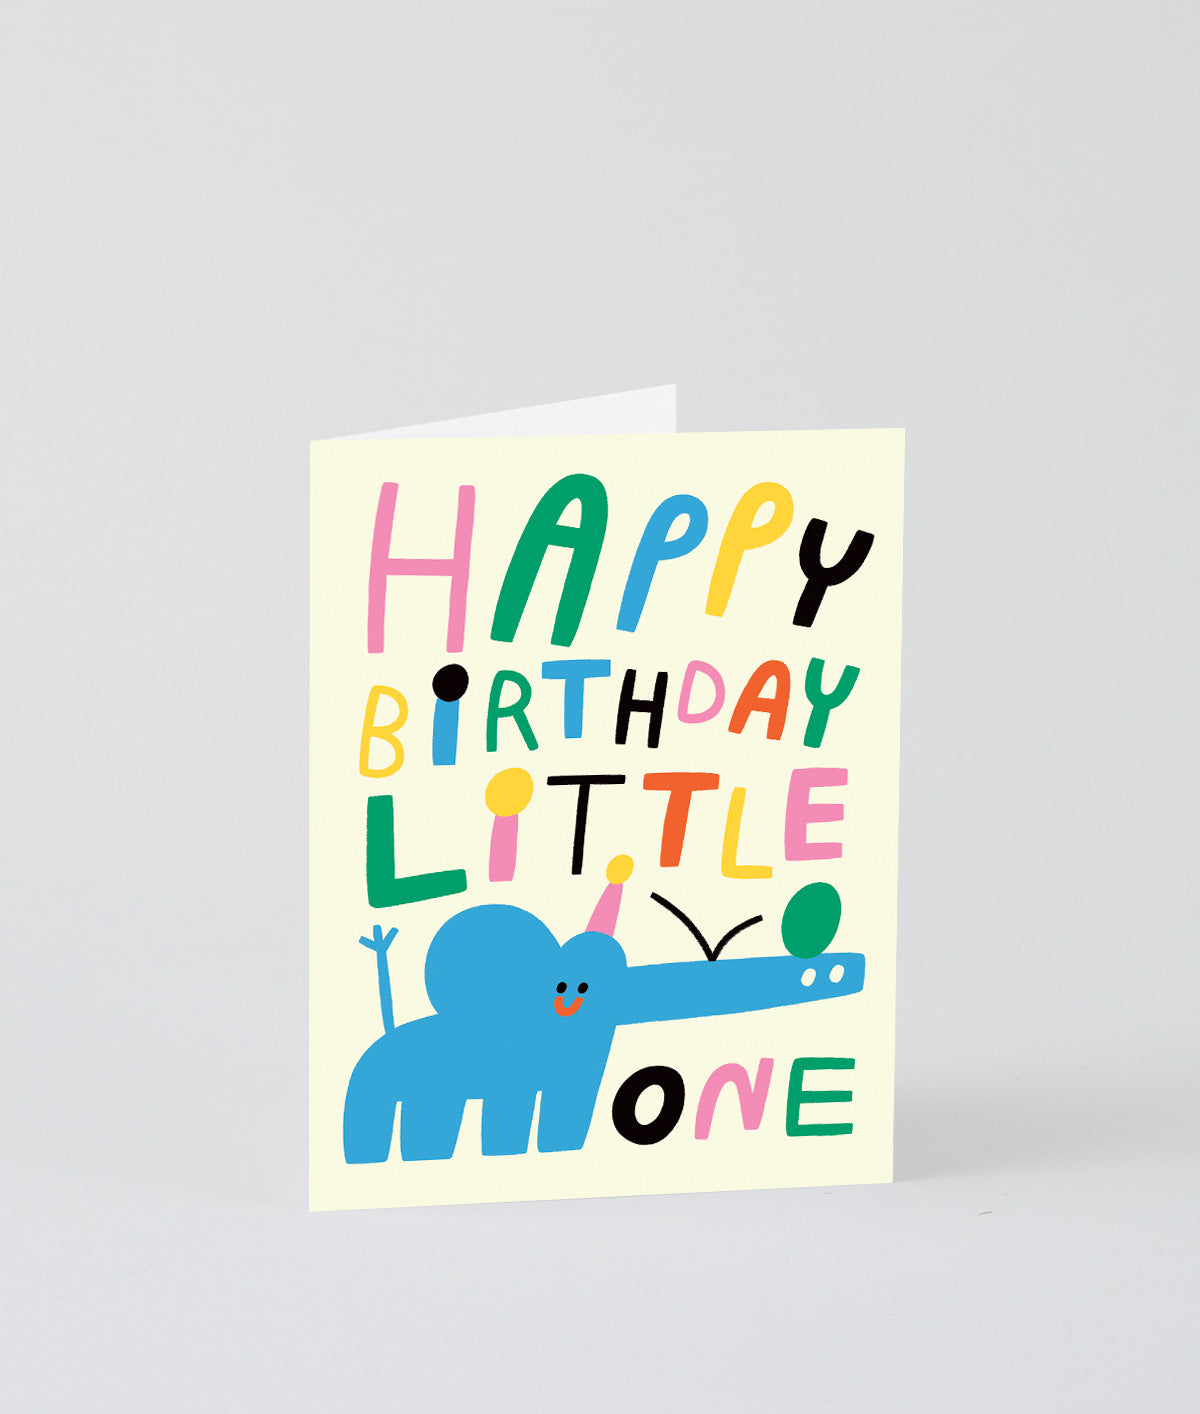 Happy Birthday Little One Kids Greetings Card